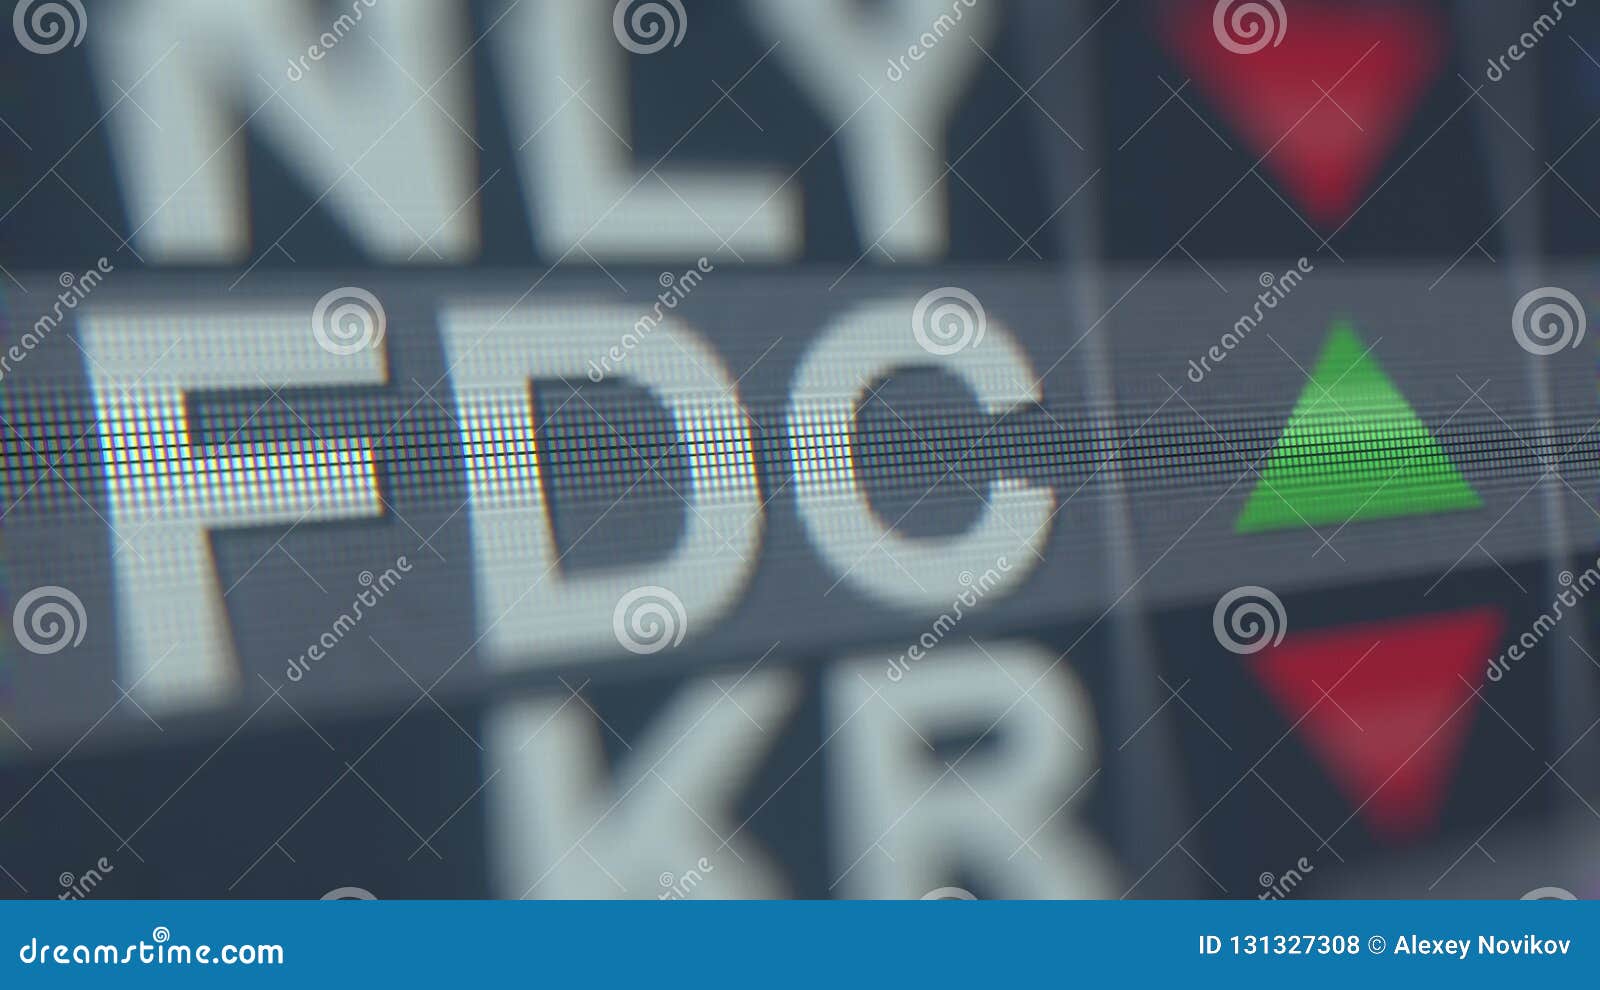 Fdc Stock Chart